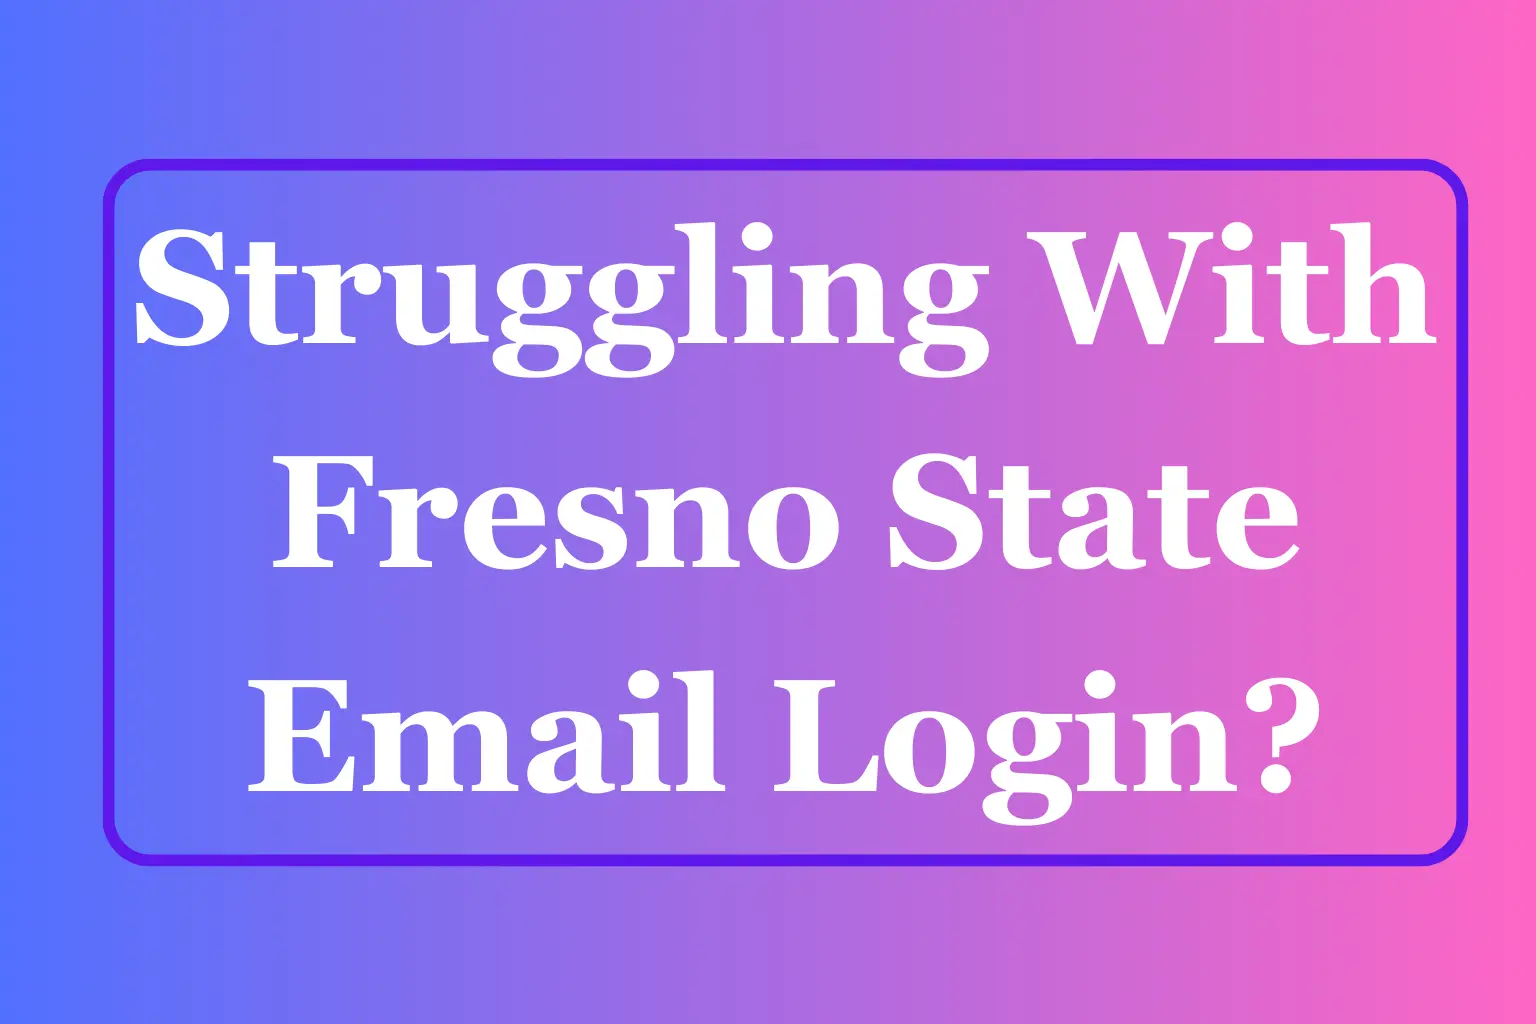 Fresno State Email Login